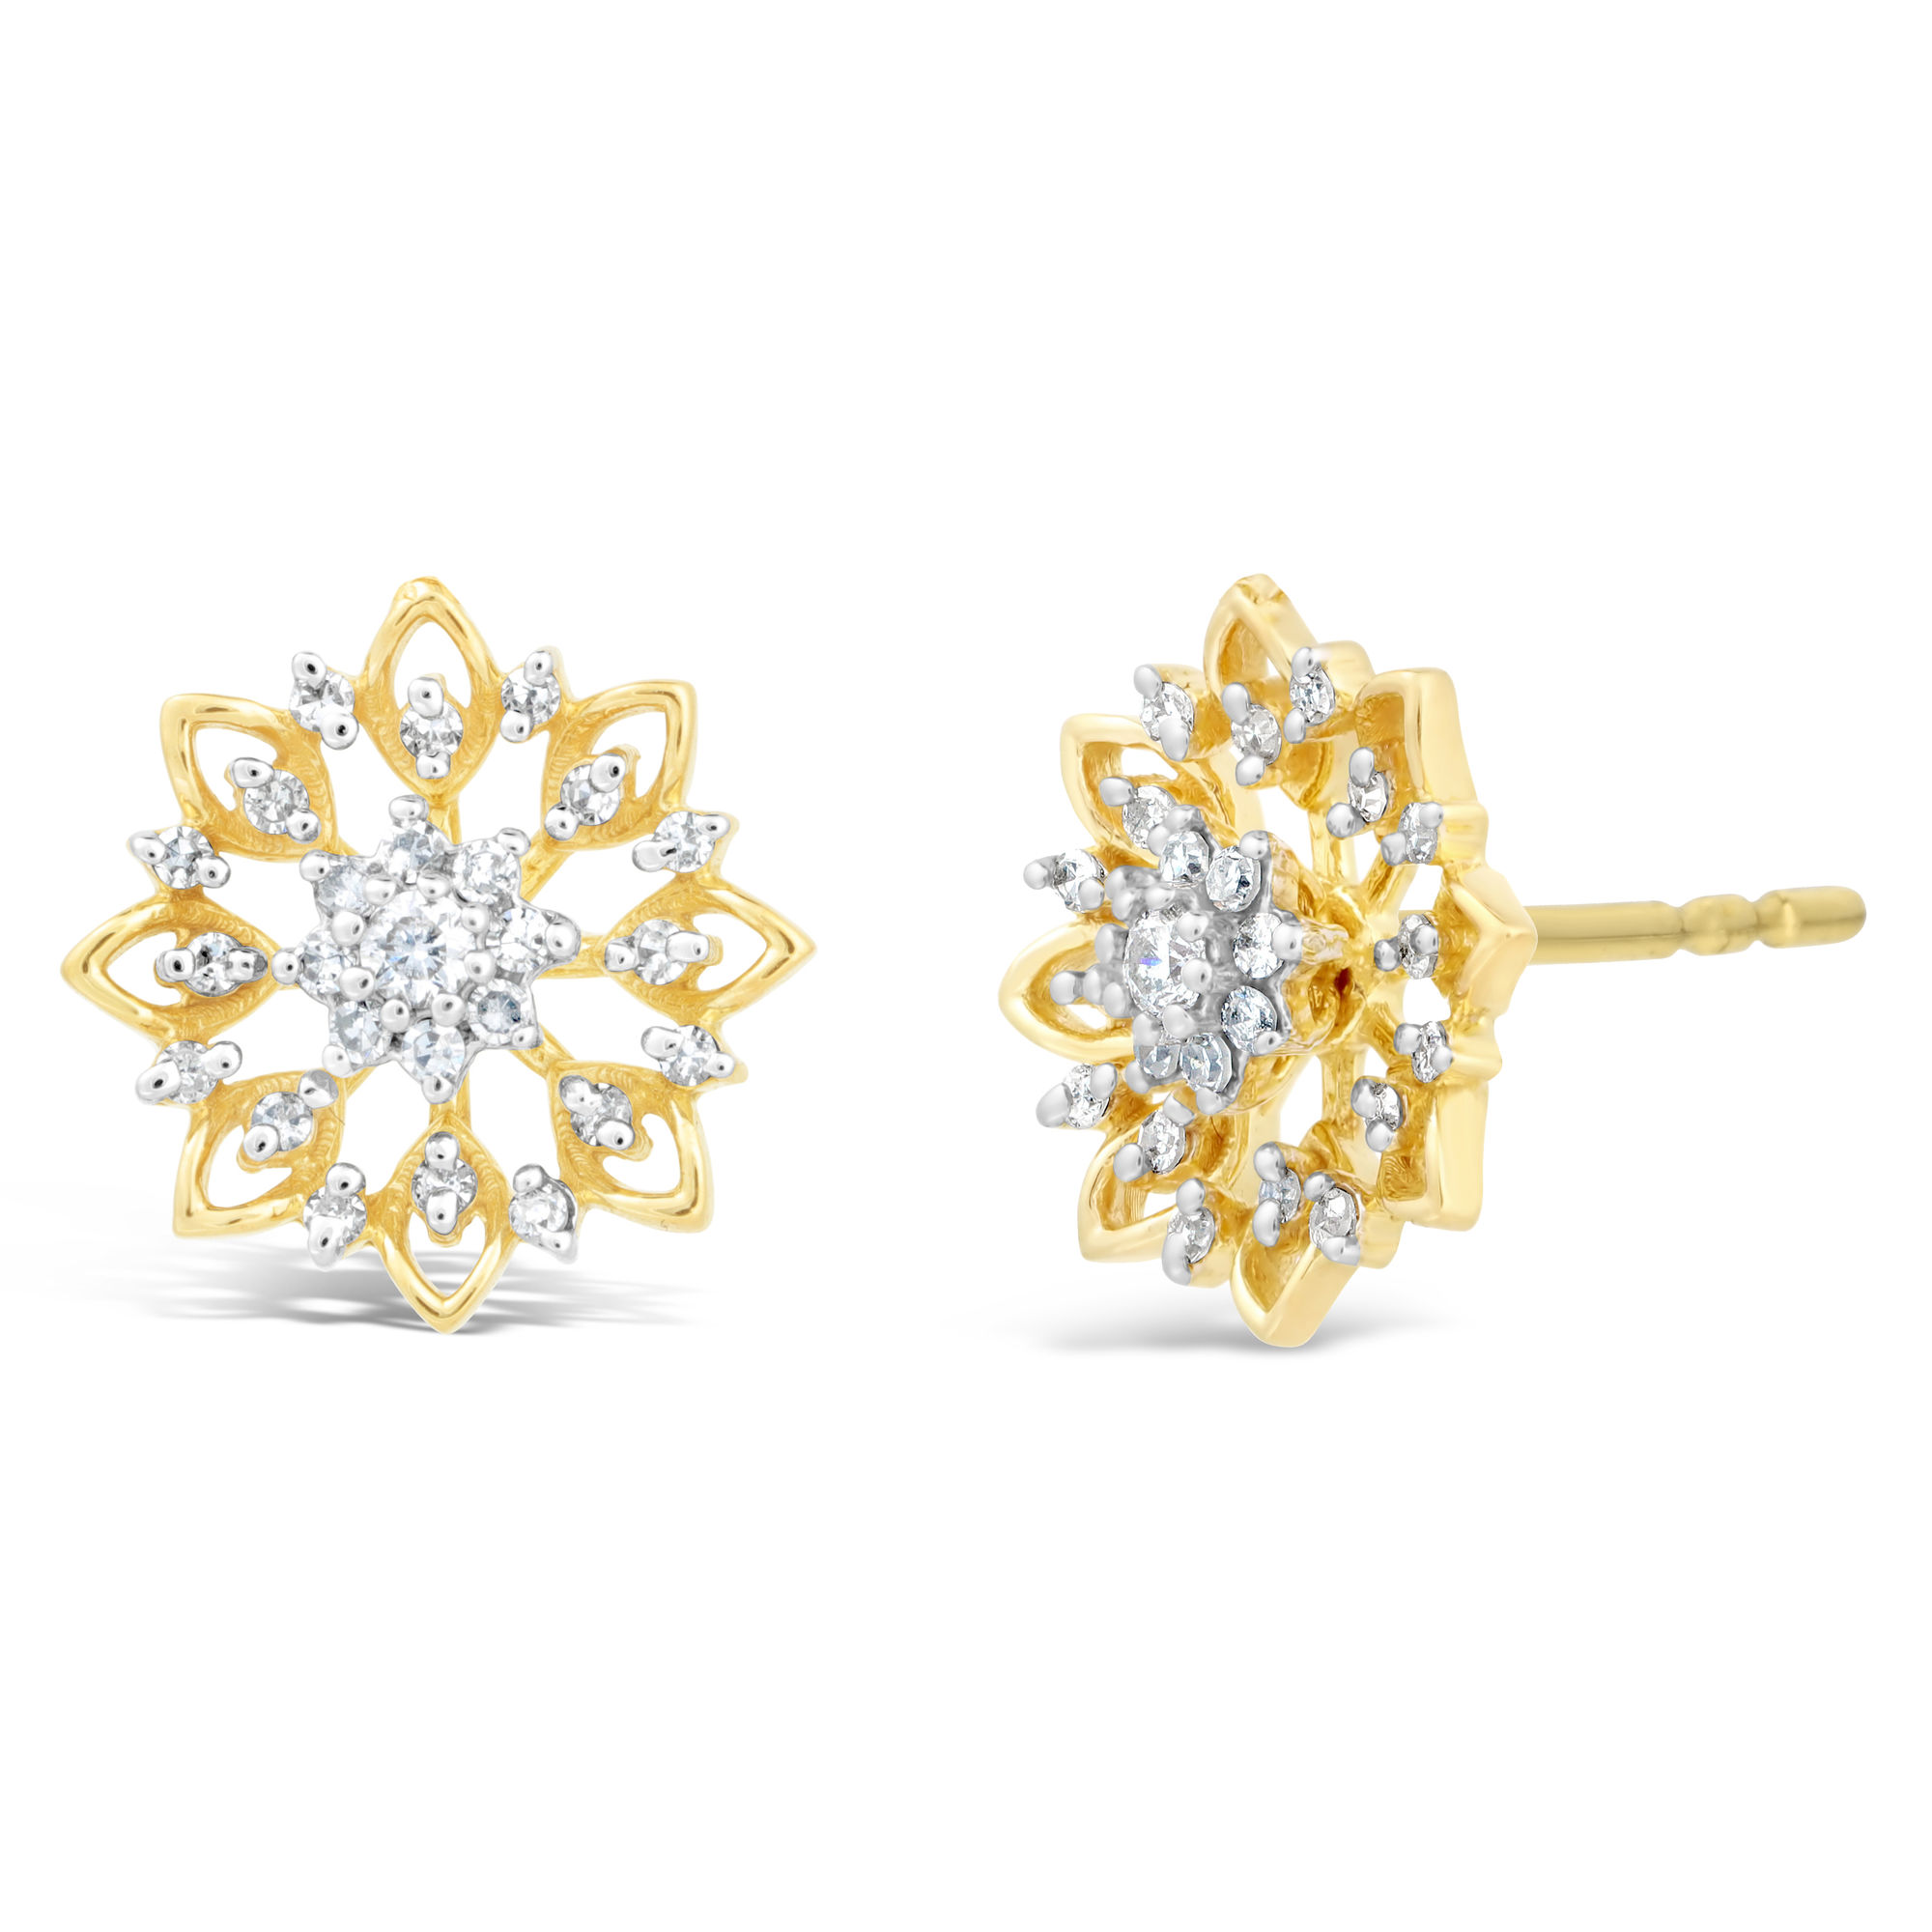 47530-earrings-fashion-diamond-yellow-sterling-silver-white-diamonds-0-003-h-i2-i3-white-diamond-007-.jpg